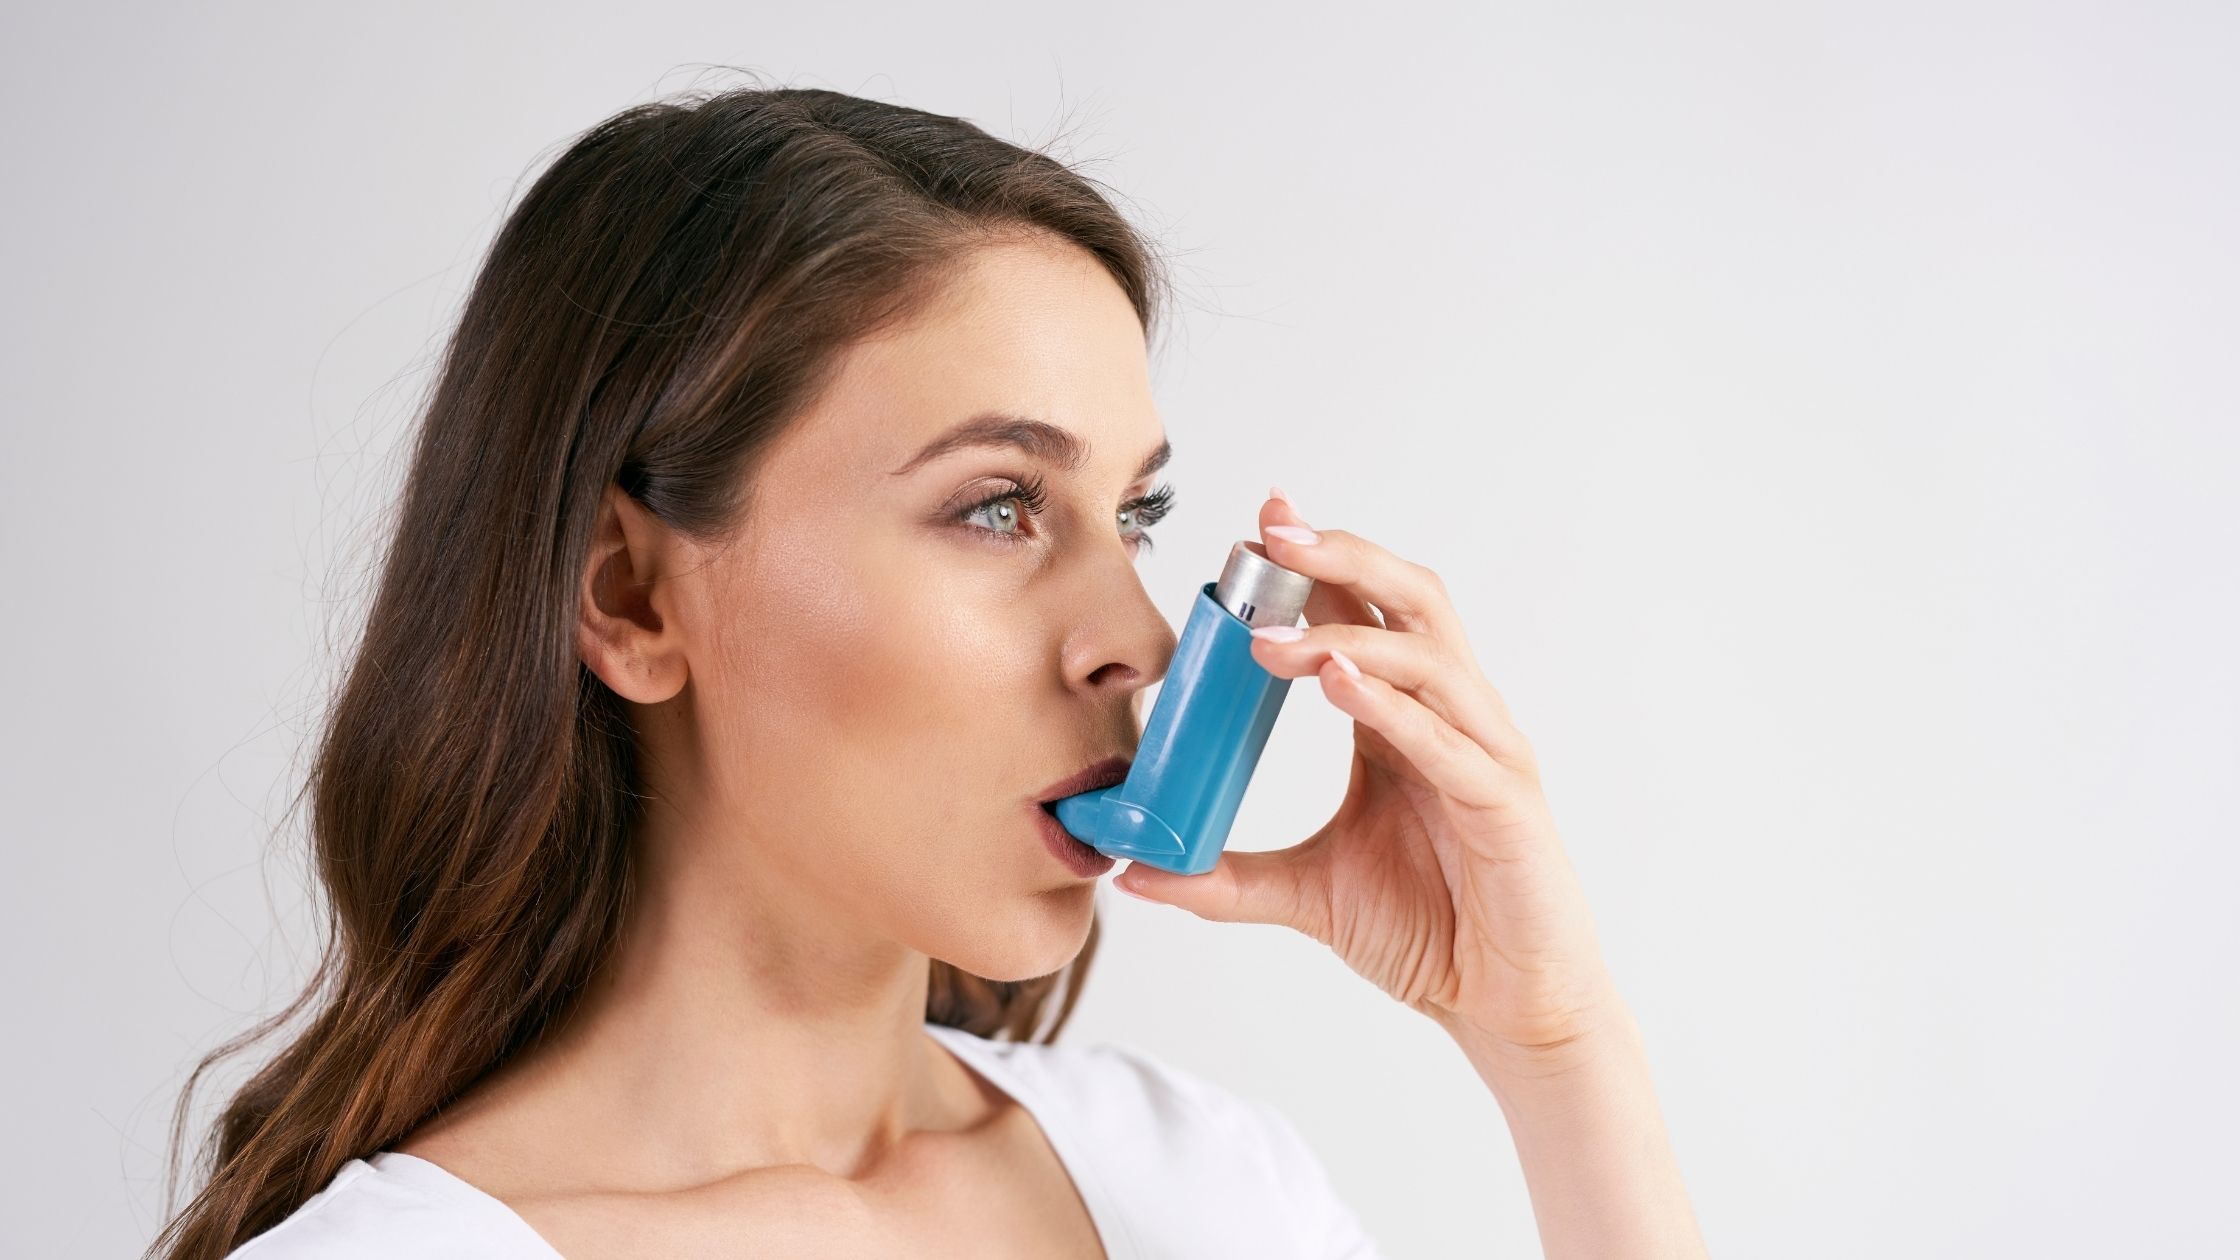 Cannabidiol (CBD Oil) Inhaler Use, Effects and Safety